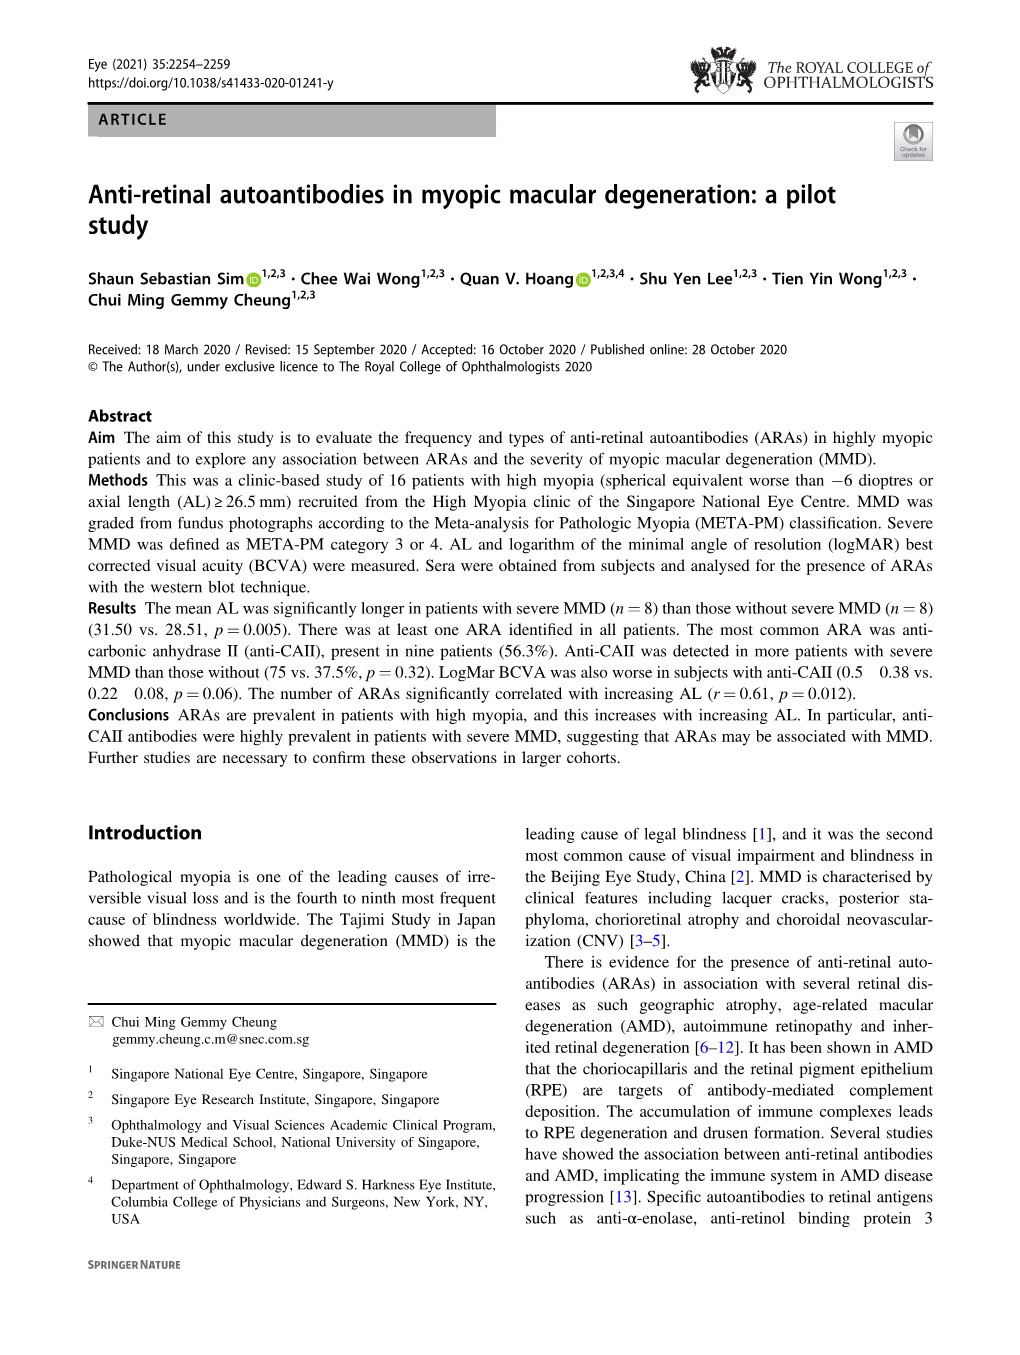 Anti-Retinal Autoantibodies in Myopic Macular Degeneration: a Pilot Study